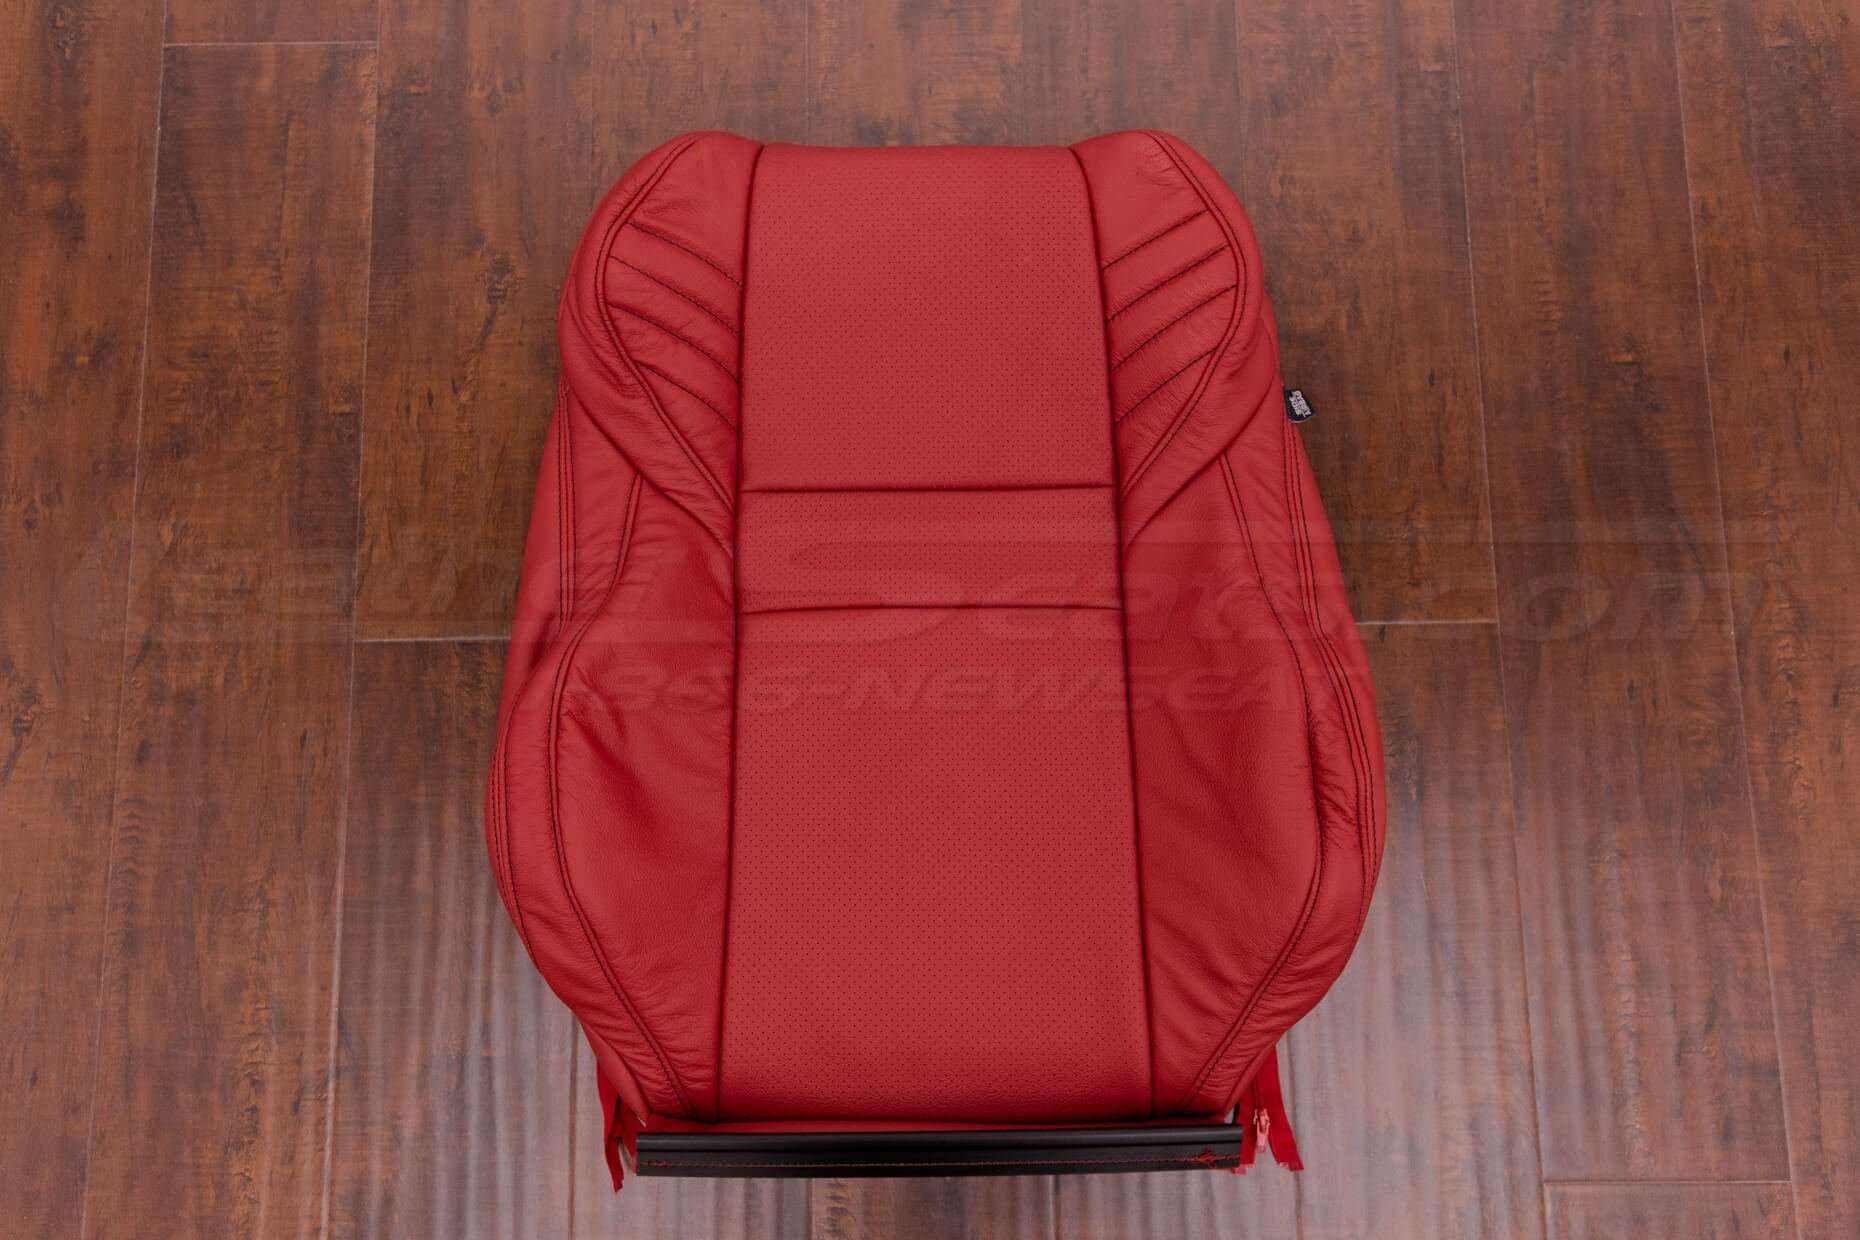 Subaru Impreza WRX Upholstery Kit- Bright Red - Front backrest